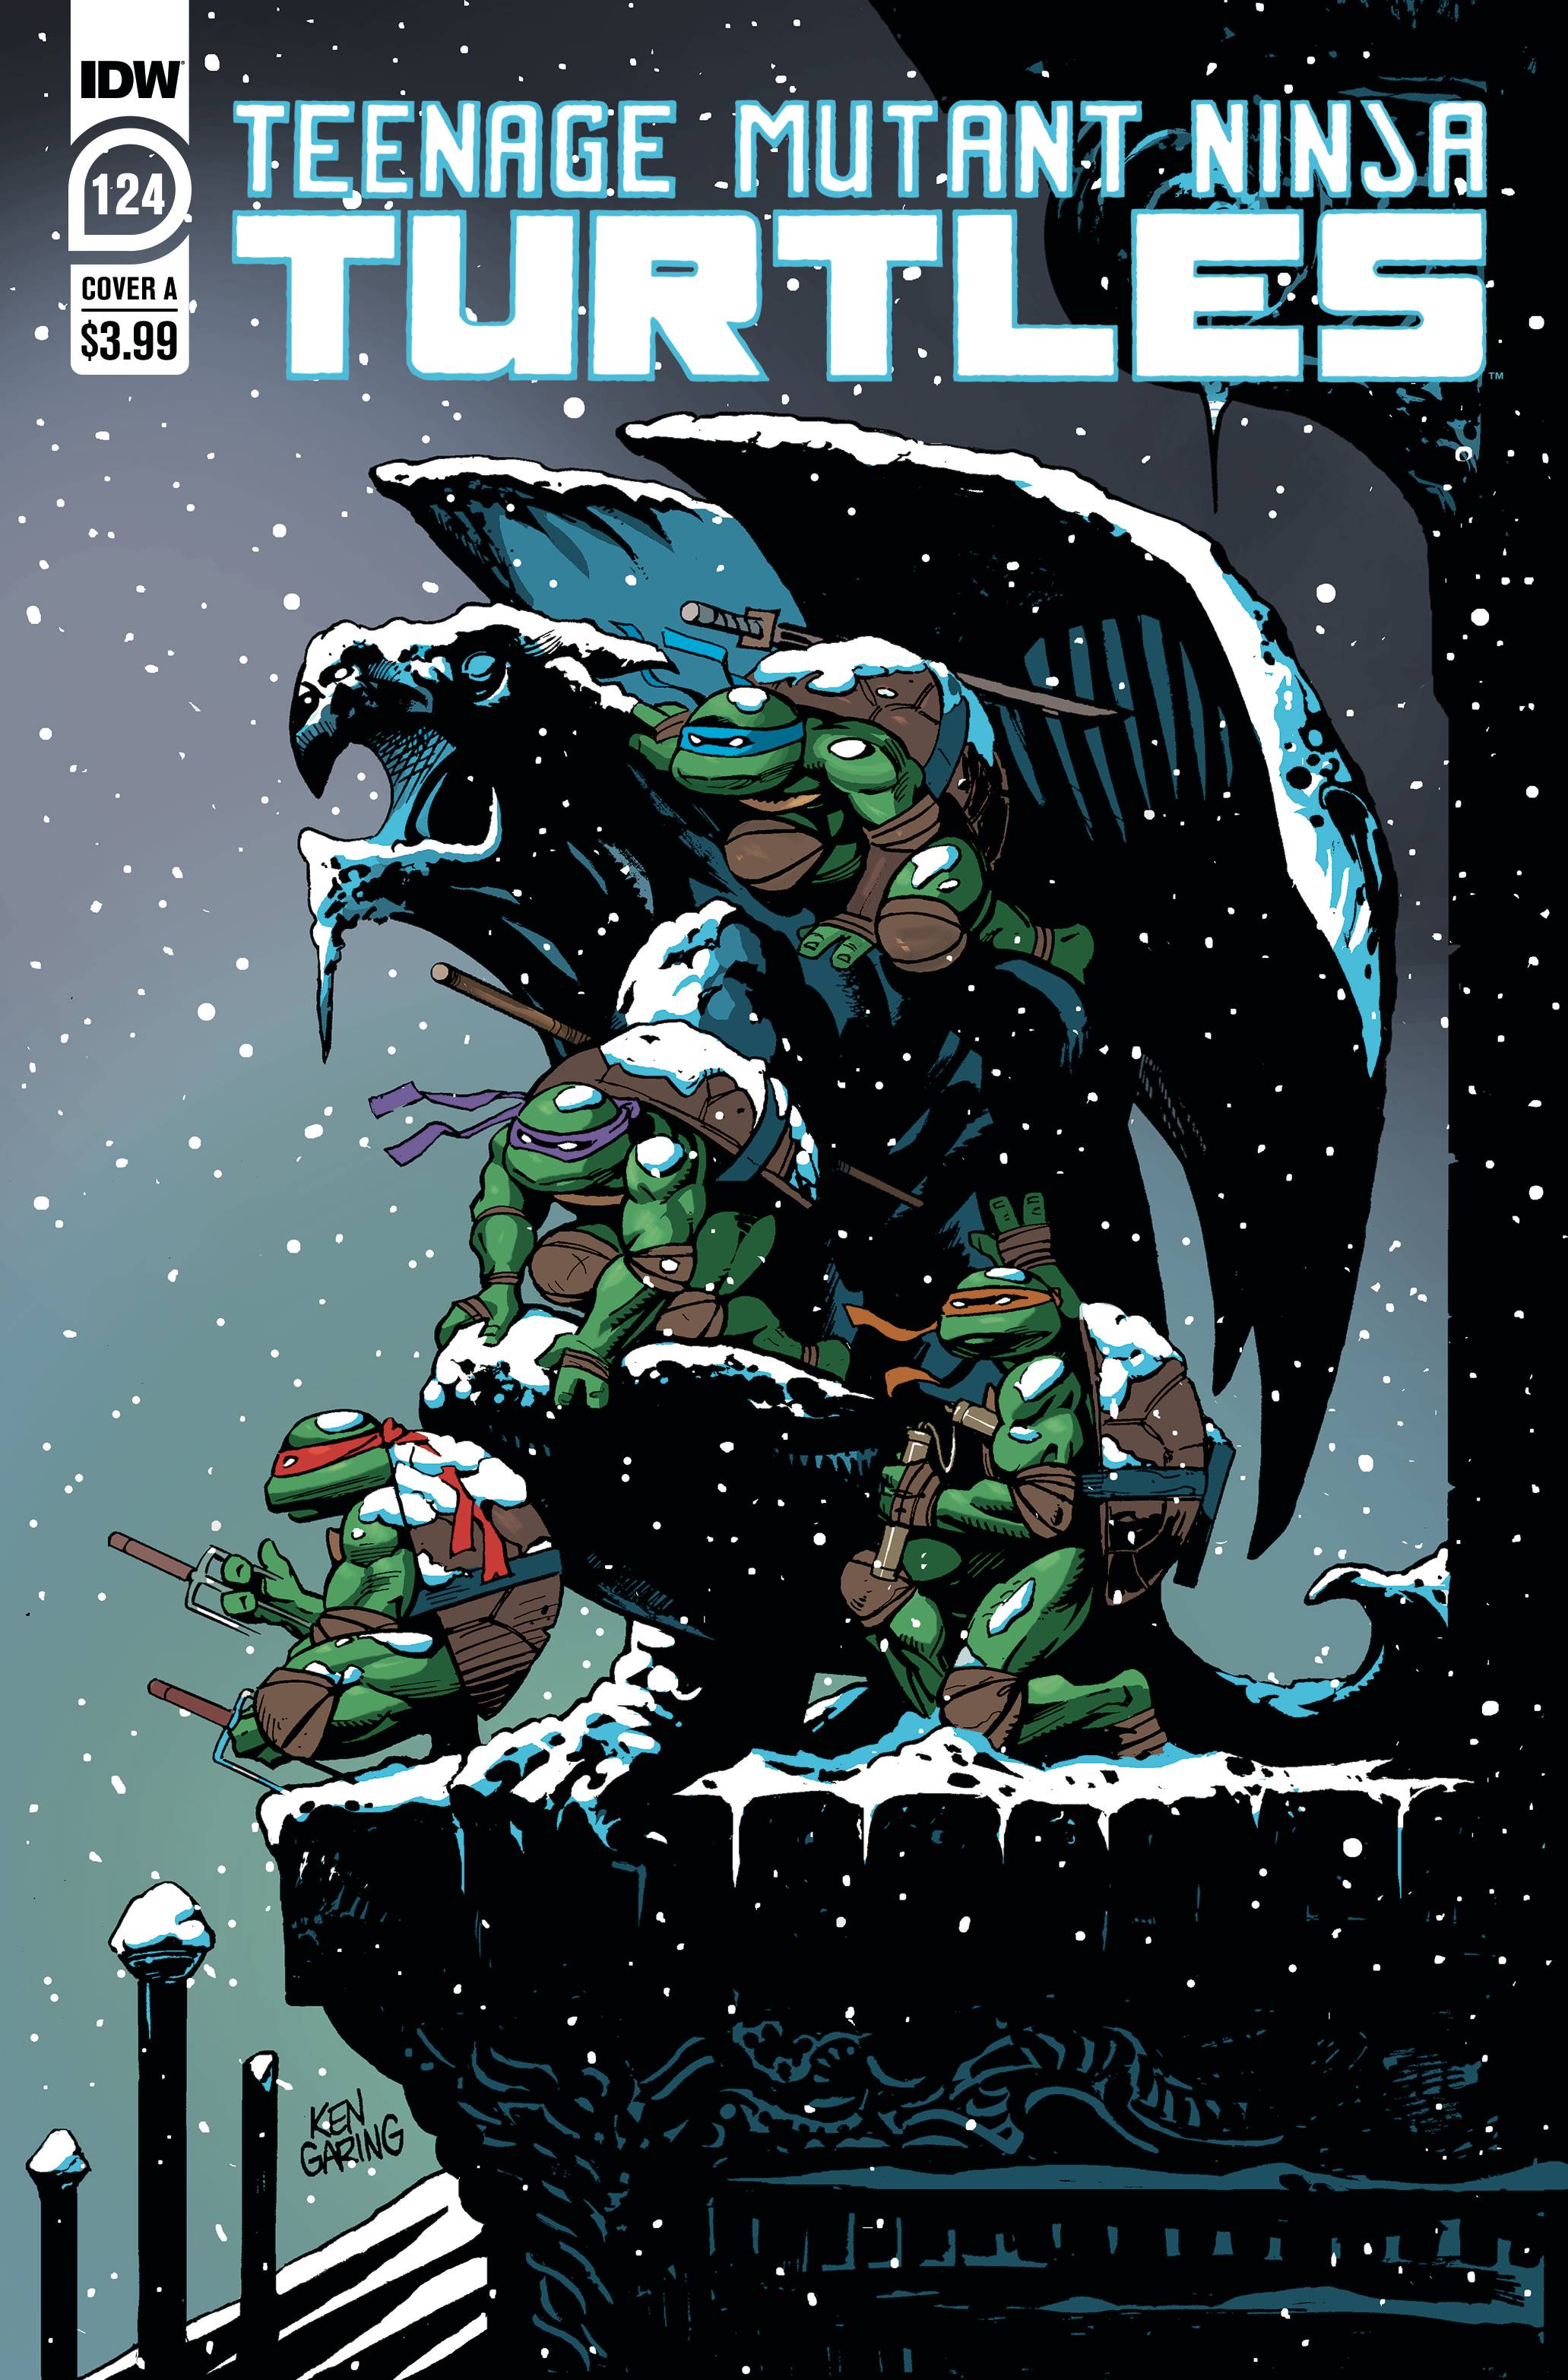 Teenage Mutant Ninja Turtles Ongoing #124 Cover A Ken Garing (2011)